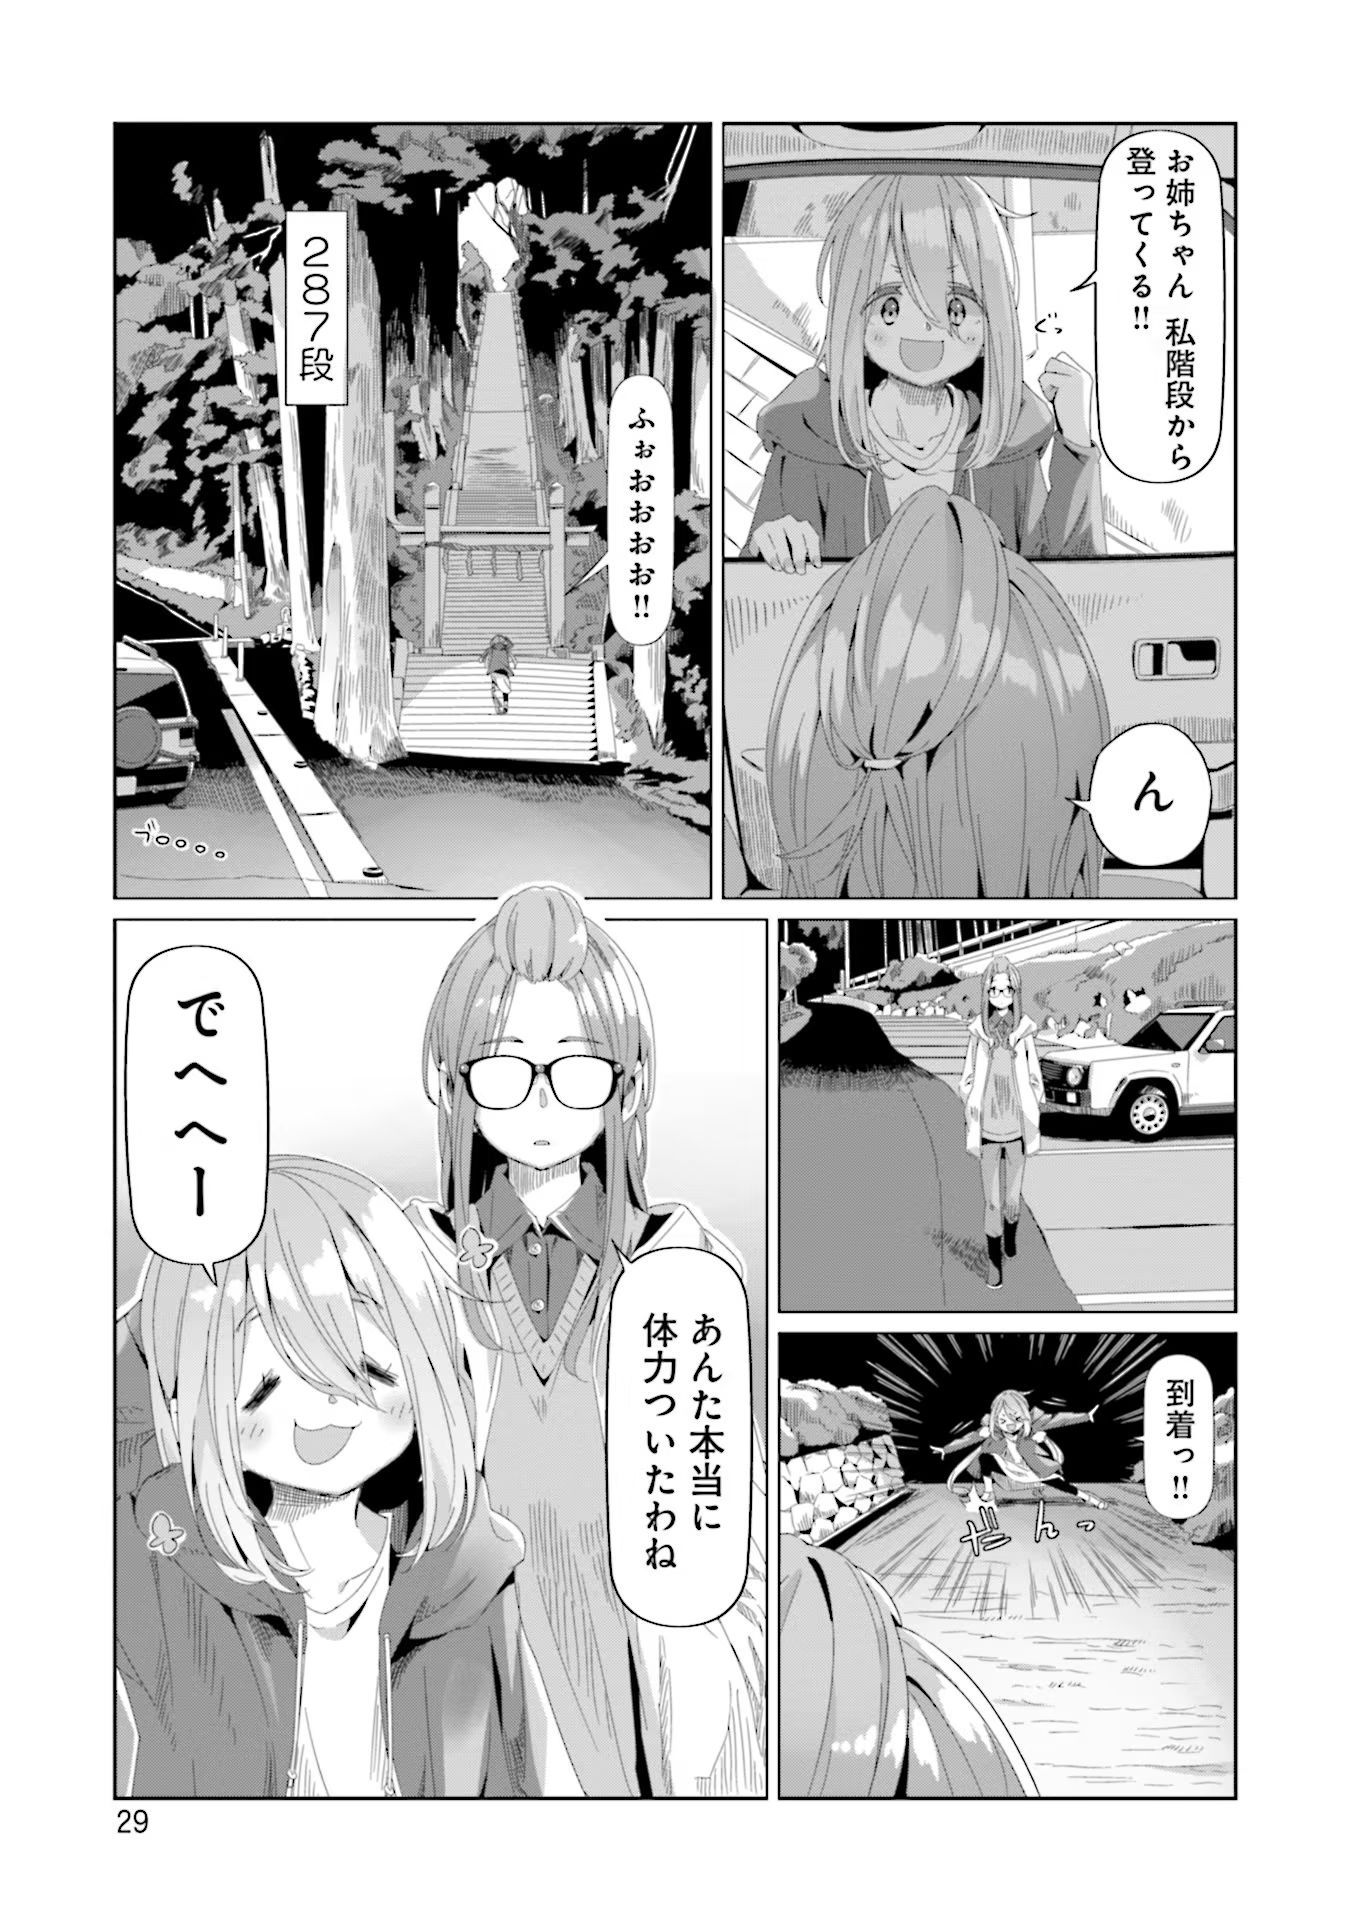 Yuru Camp - Chapter 71 - Page 1